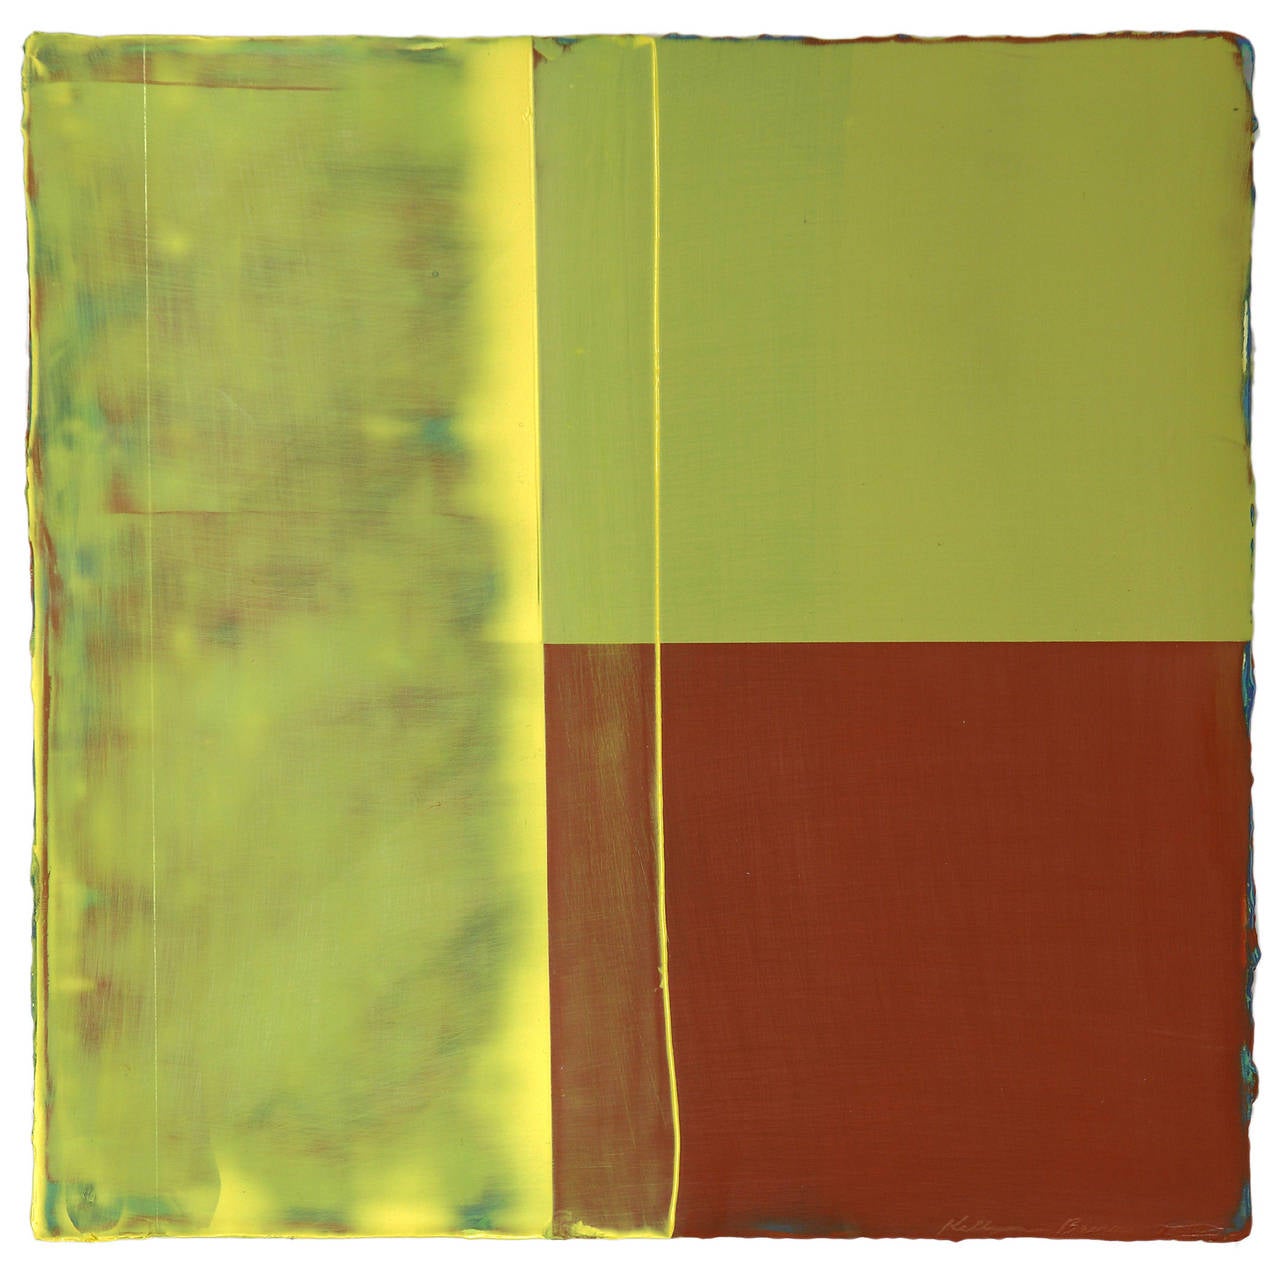 Kellyann Burns Abstract Painting - 7:18 PM 4/12/13